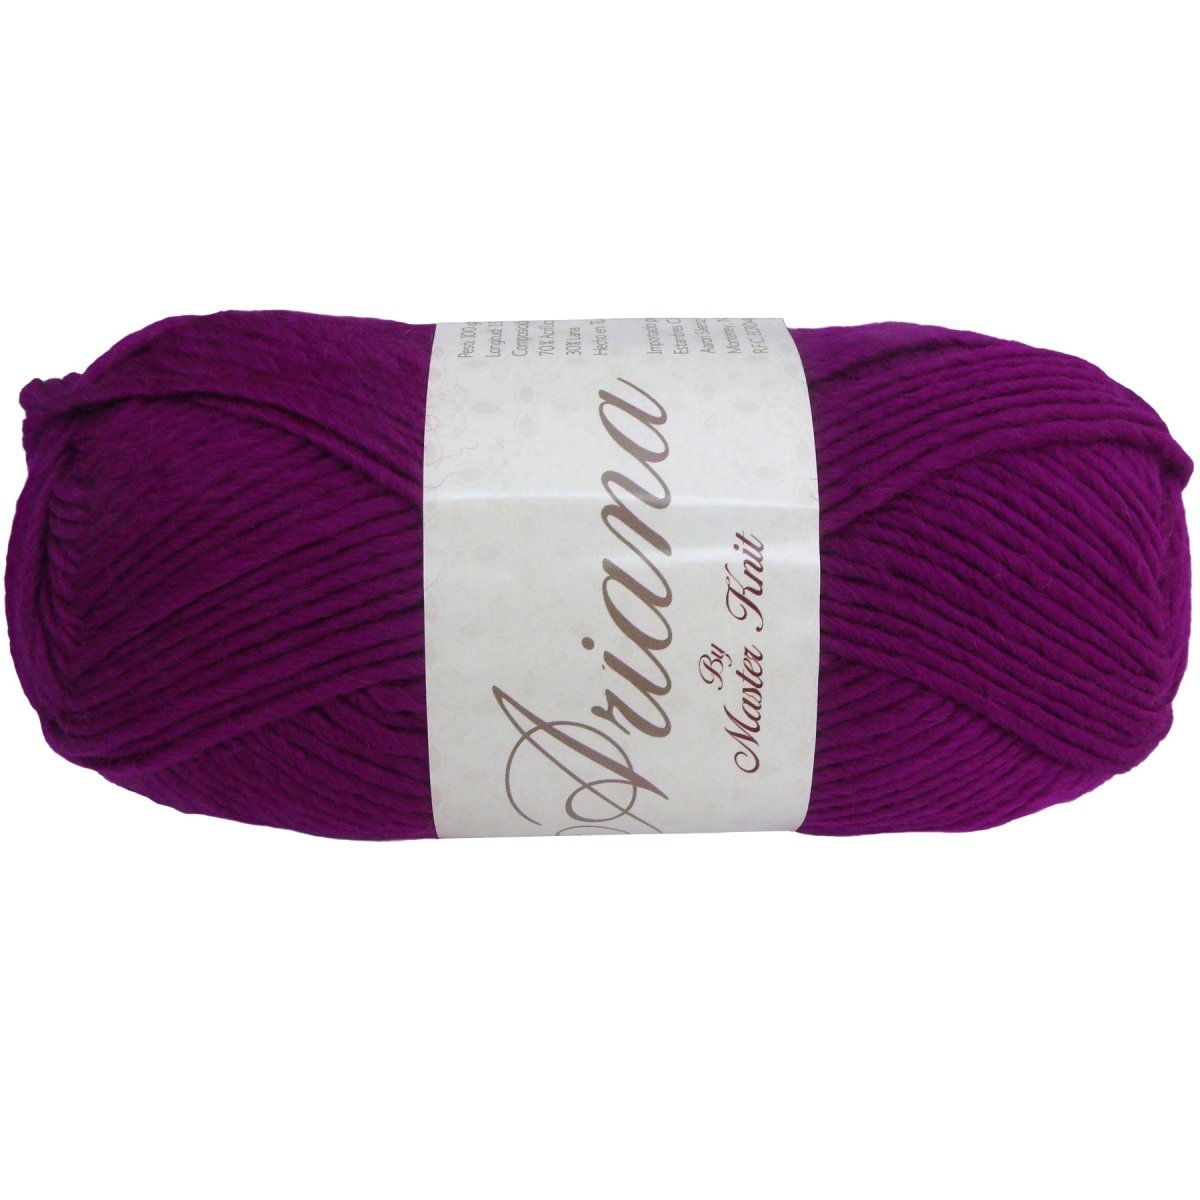 ARIANA - Aran - Crochetstores9510-305